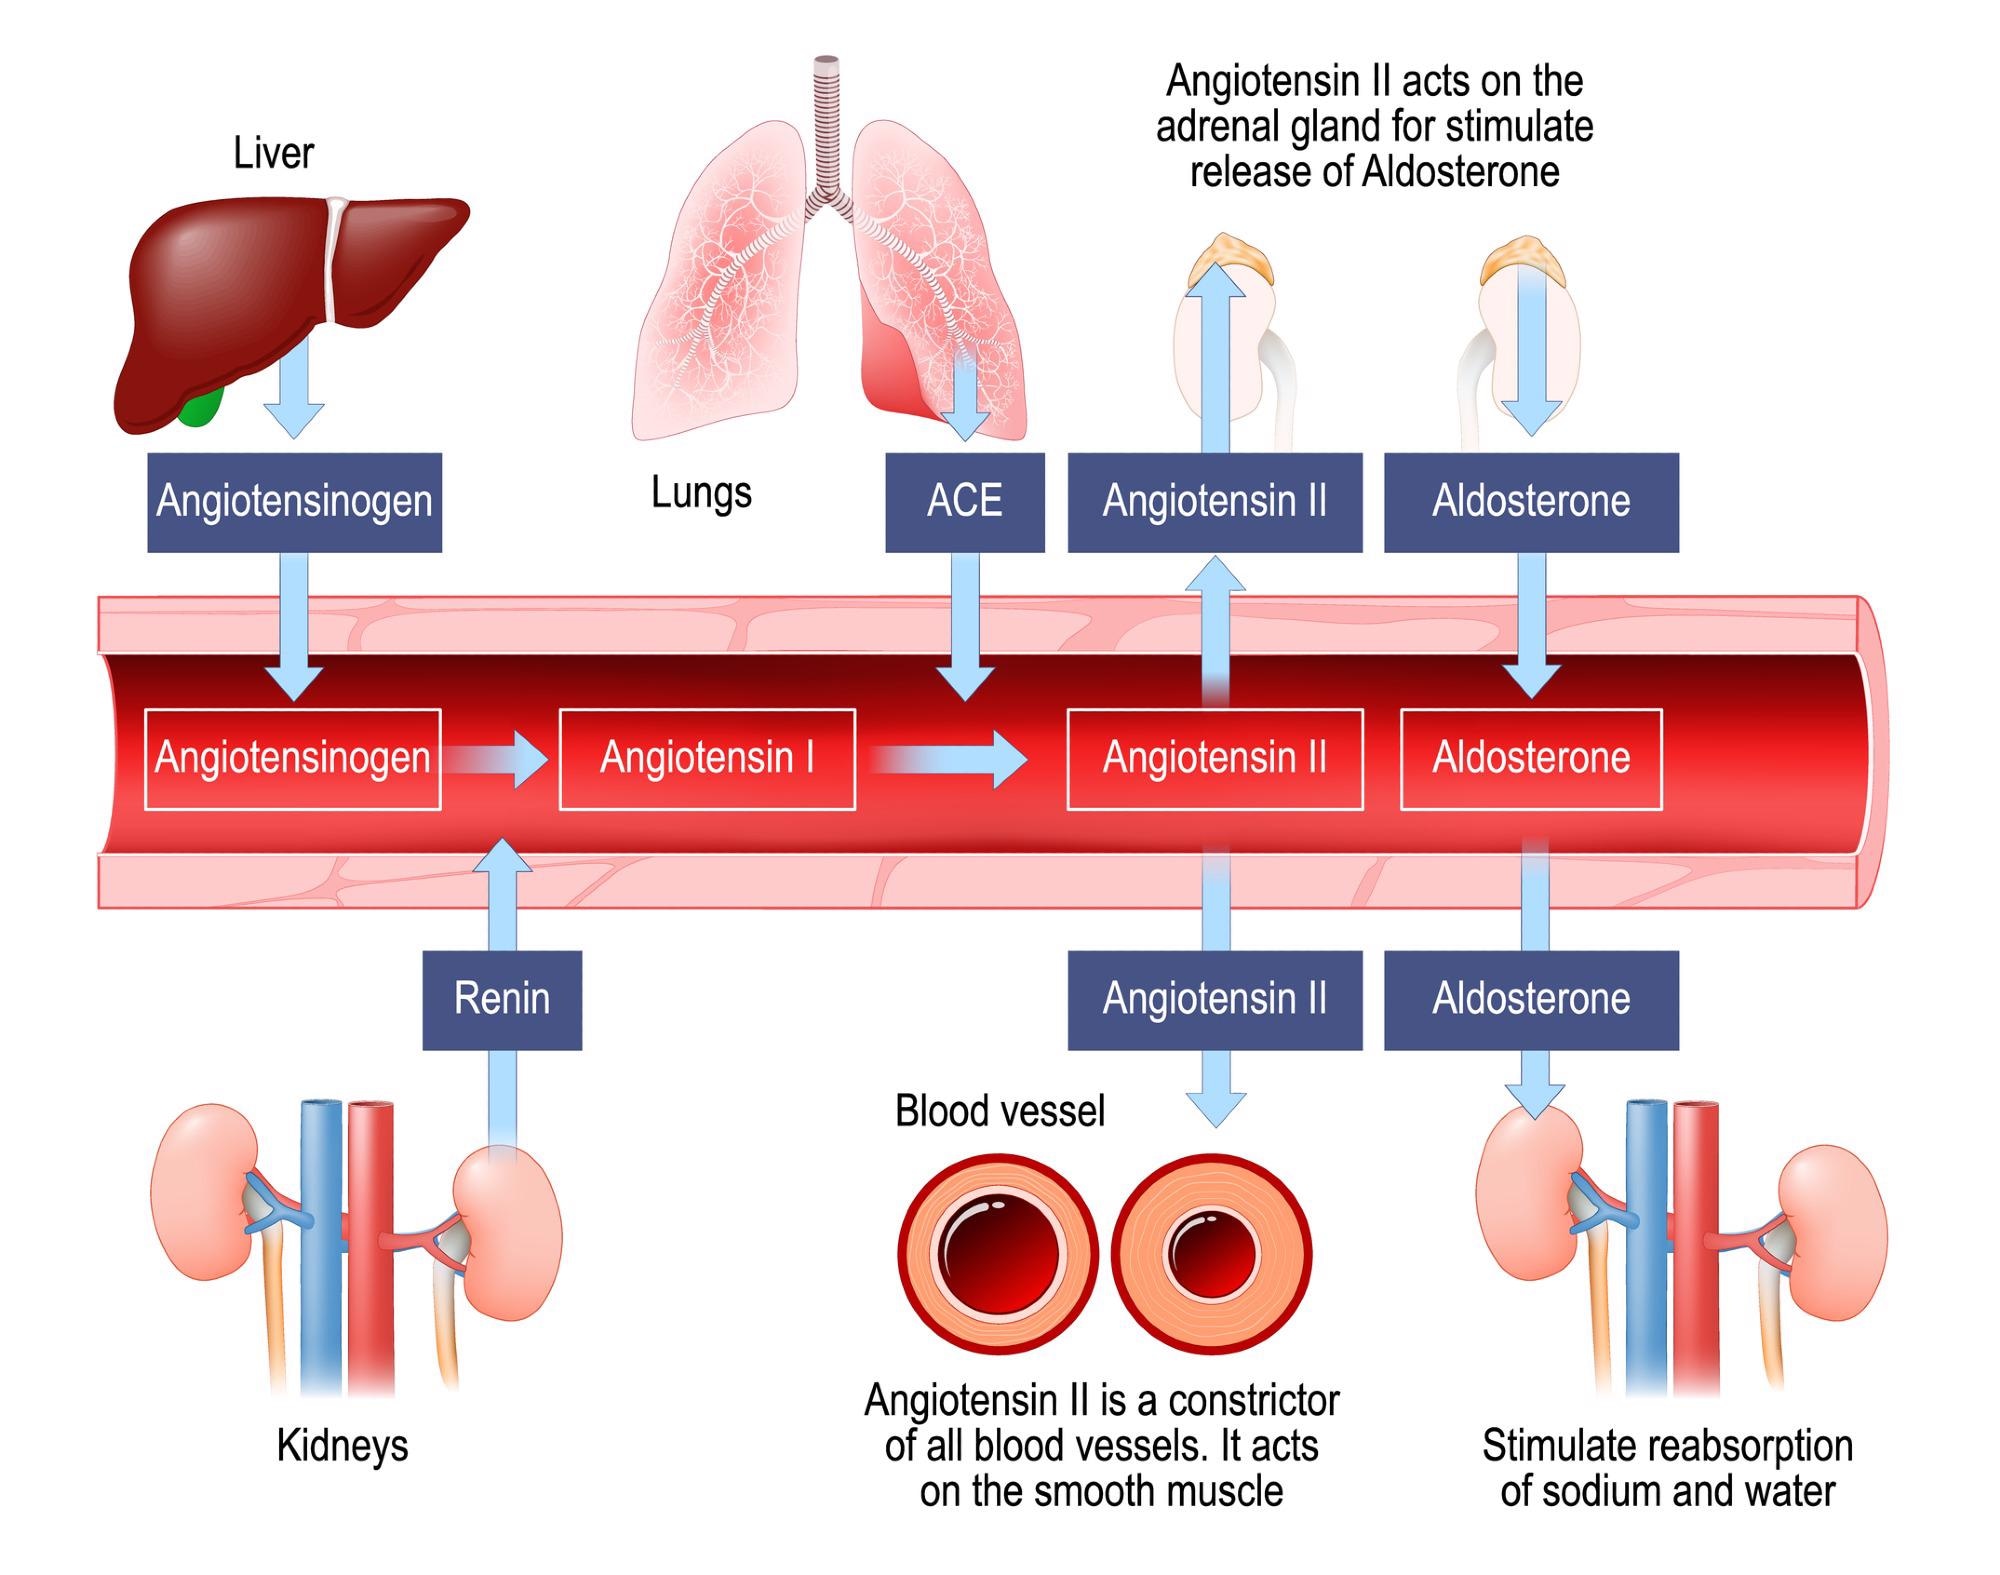 Renin–angiotensin–aldosterone system. Image Credit: Designua / Shutterstock